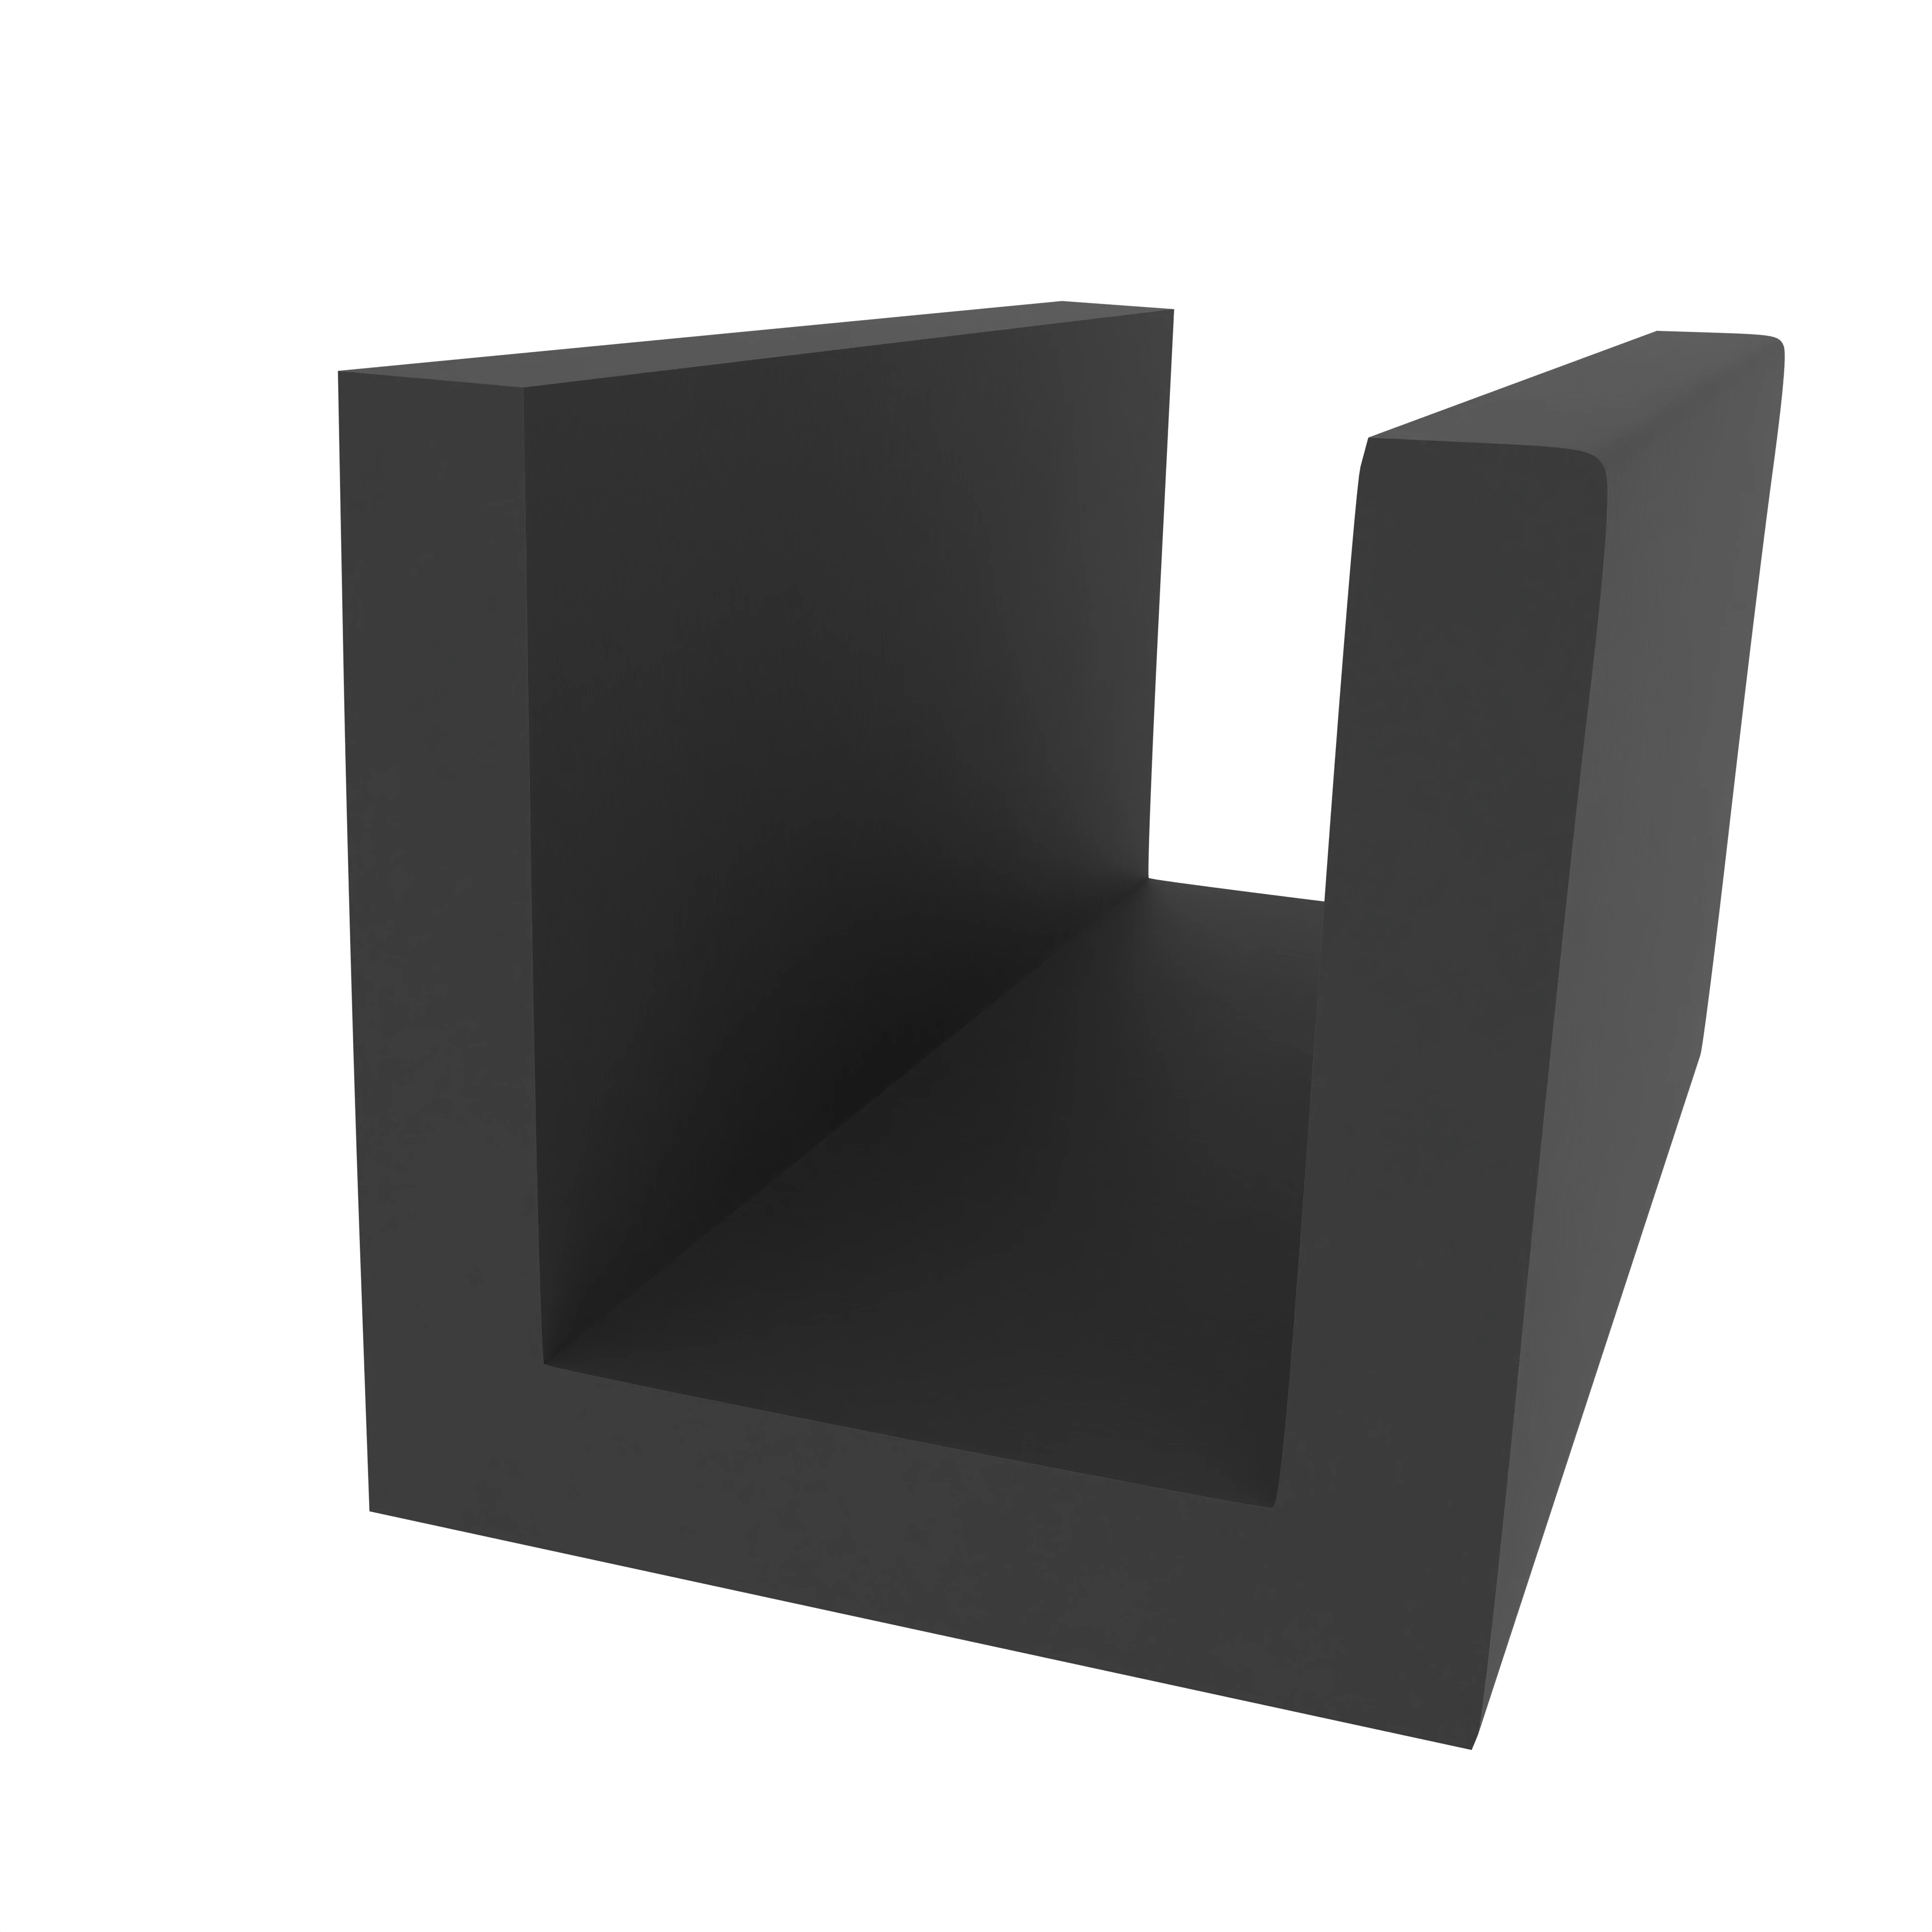 Kantenschutzprofil | Höhe: 12 mm | Farbe: schwarz